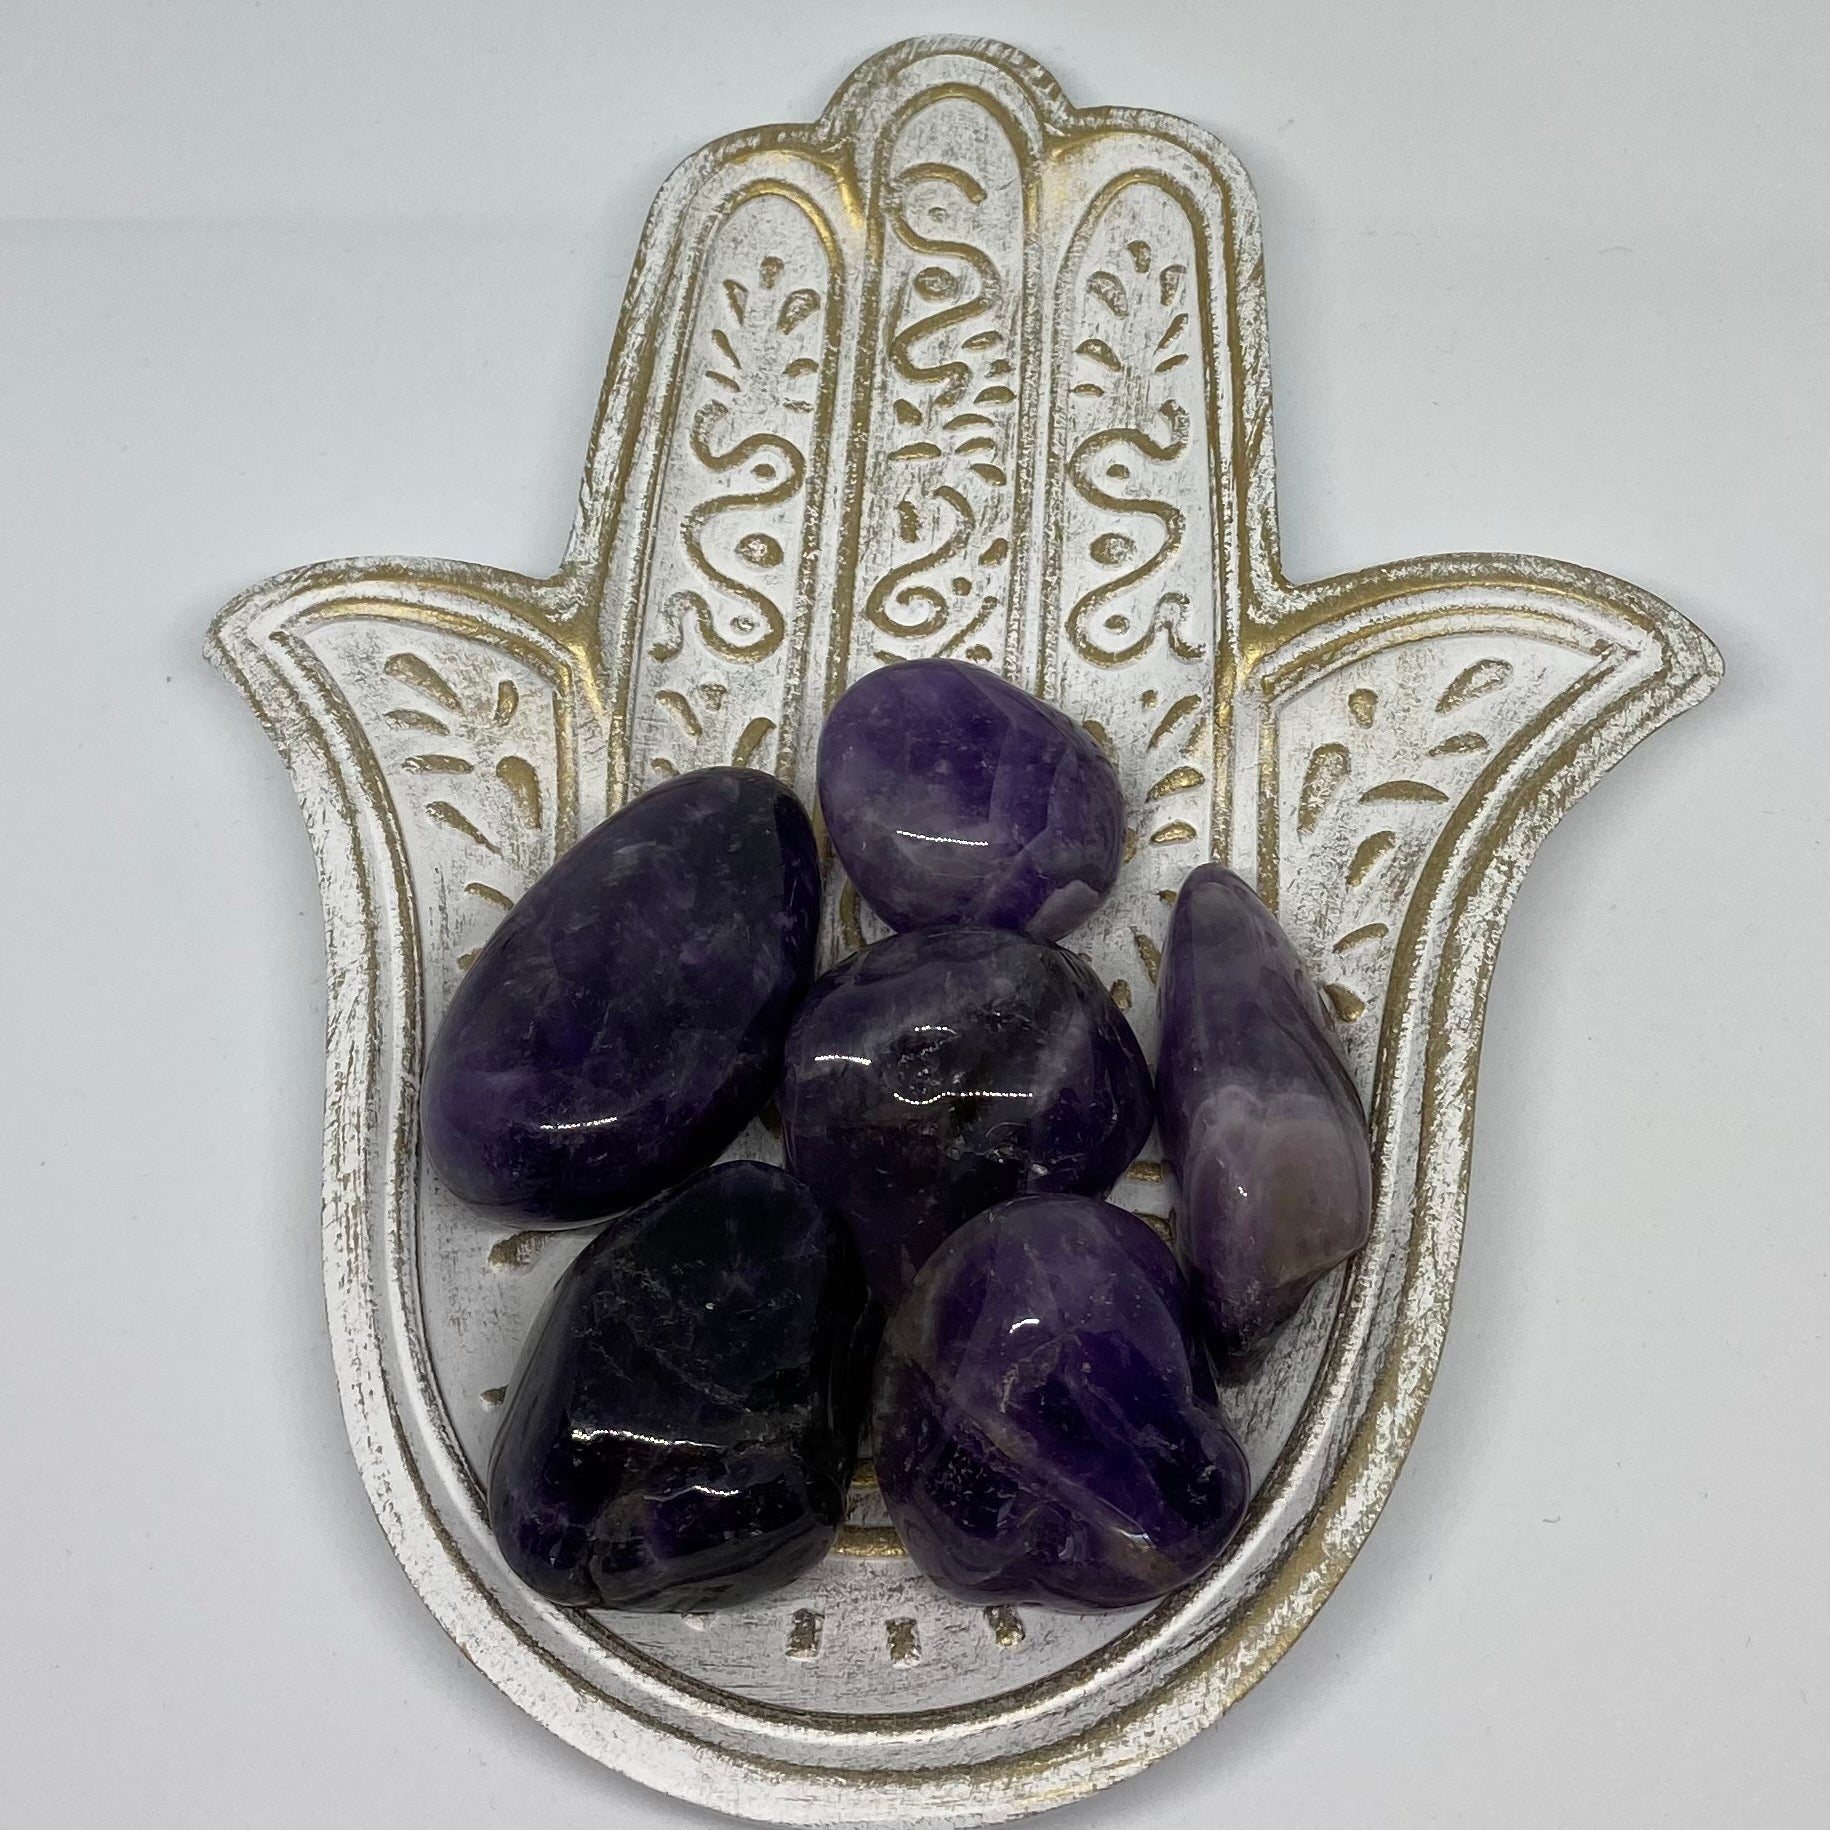 Amethyst glassy 3-5cm - size healing crystal and tumble XL gemstone